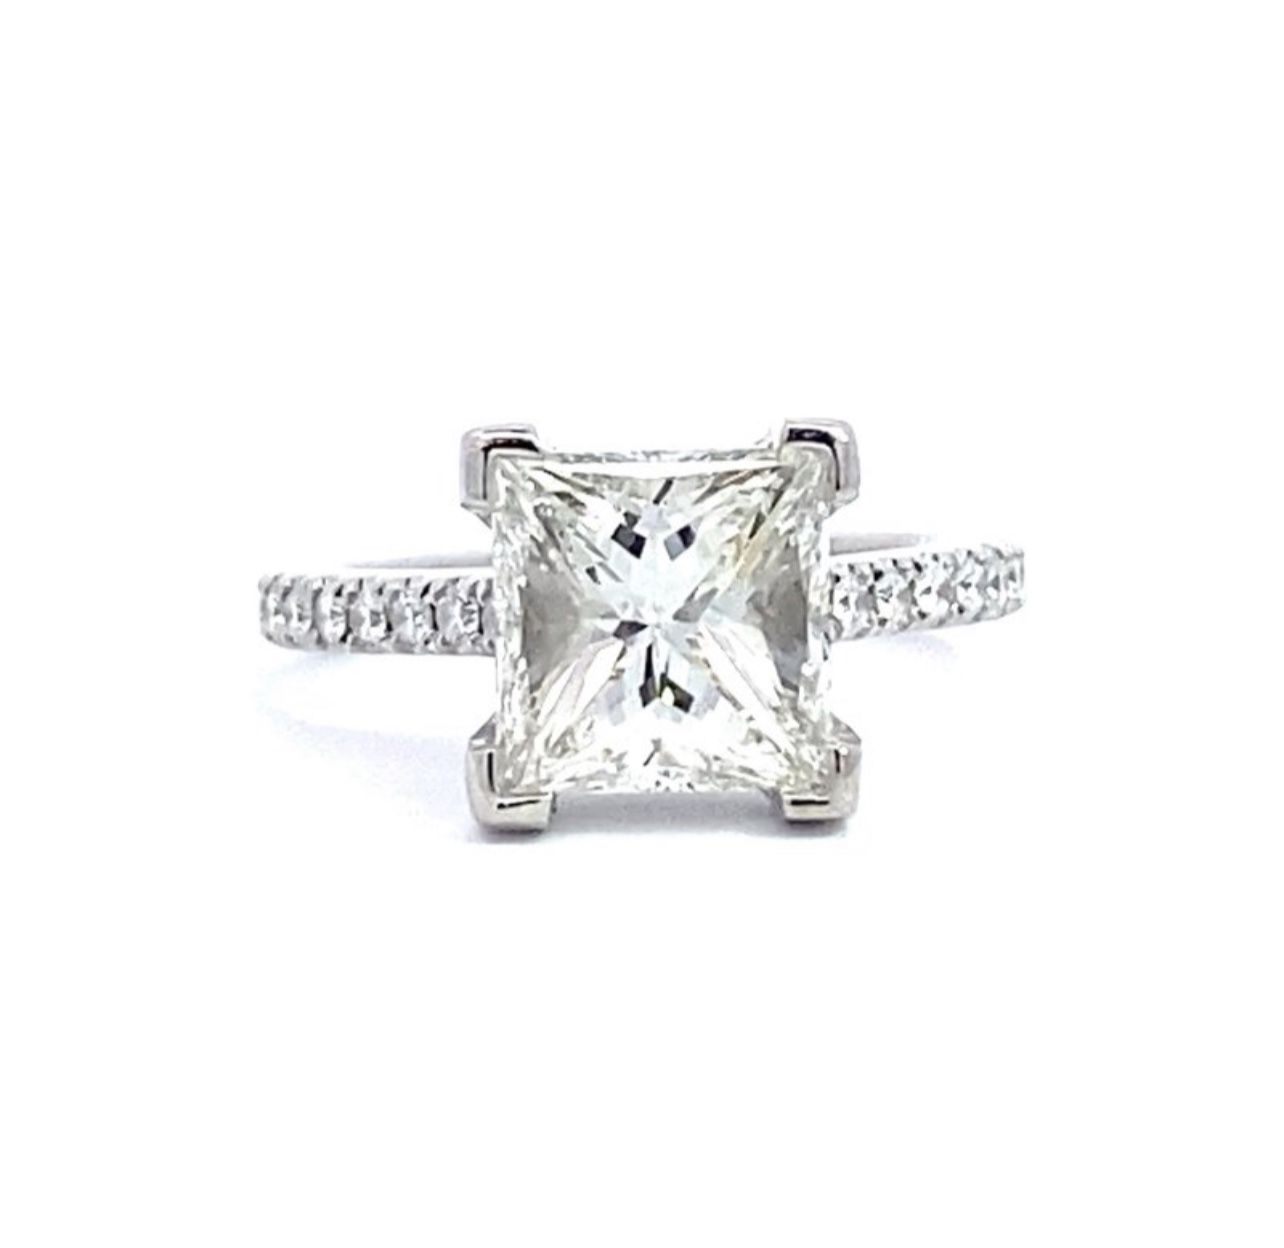 Designs Platinum Engagement Ring 💍❤️🤙🏾 Platinum diamond engagement ring set with one 2.41 carat Princess cut in the center. This diamond has a clar